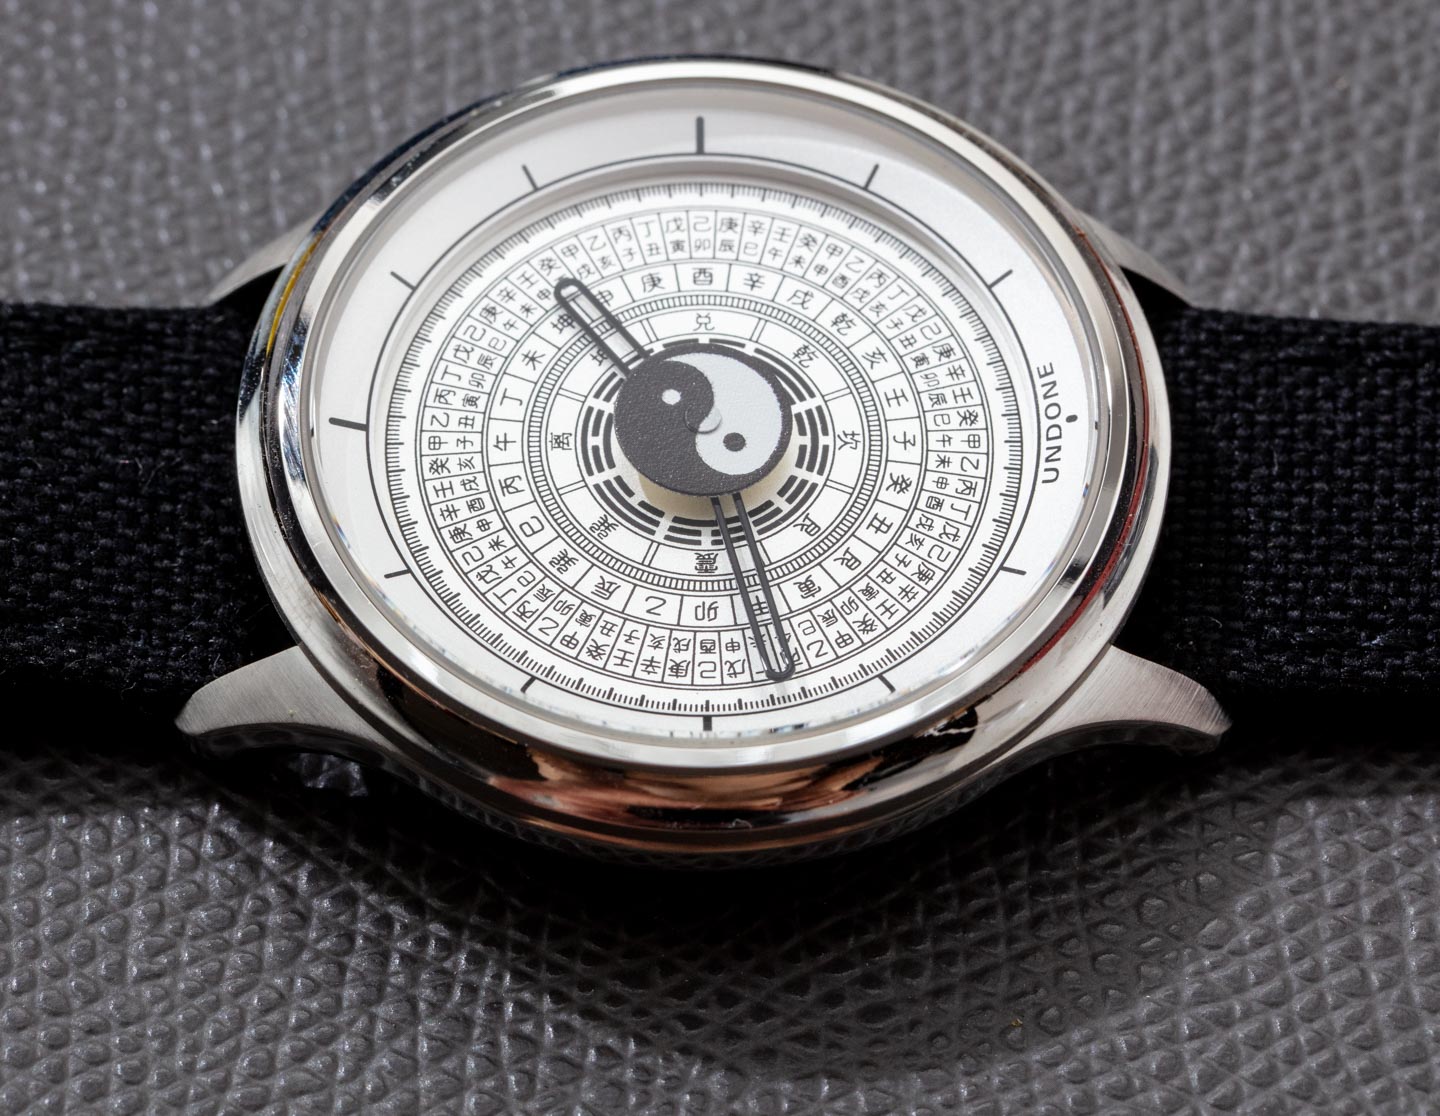 Undone品牌的Zen Cartograph腕表一款以风水罗盘为概念设计的手表